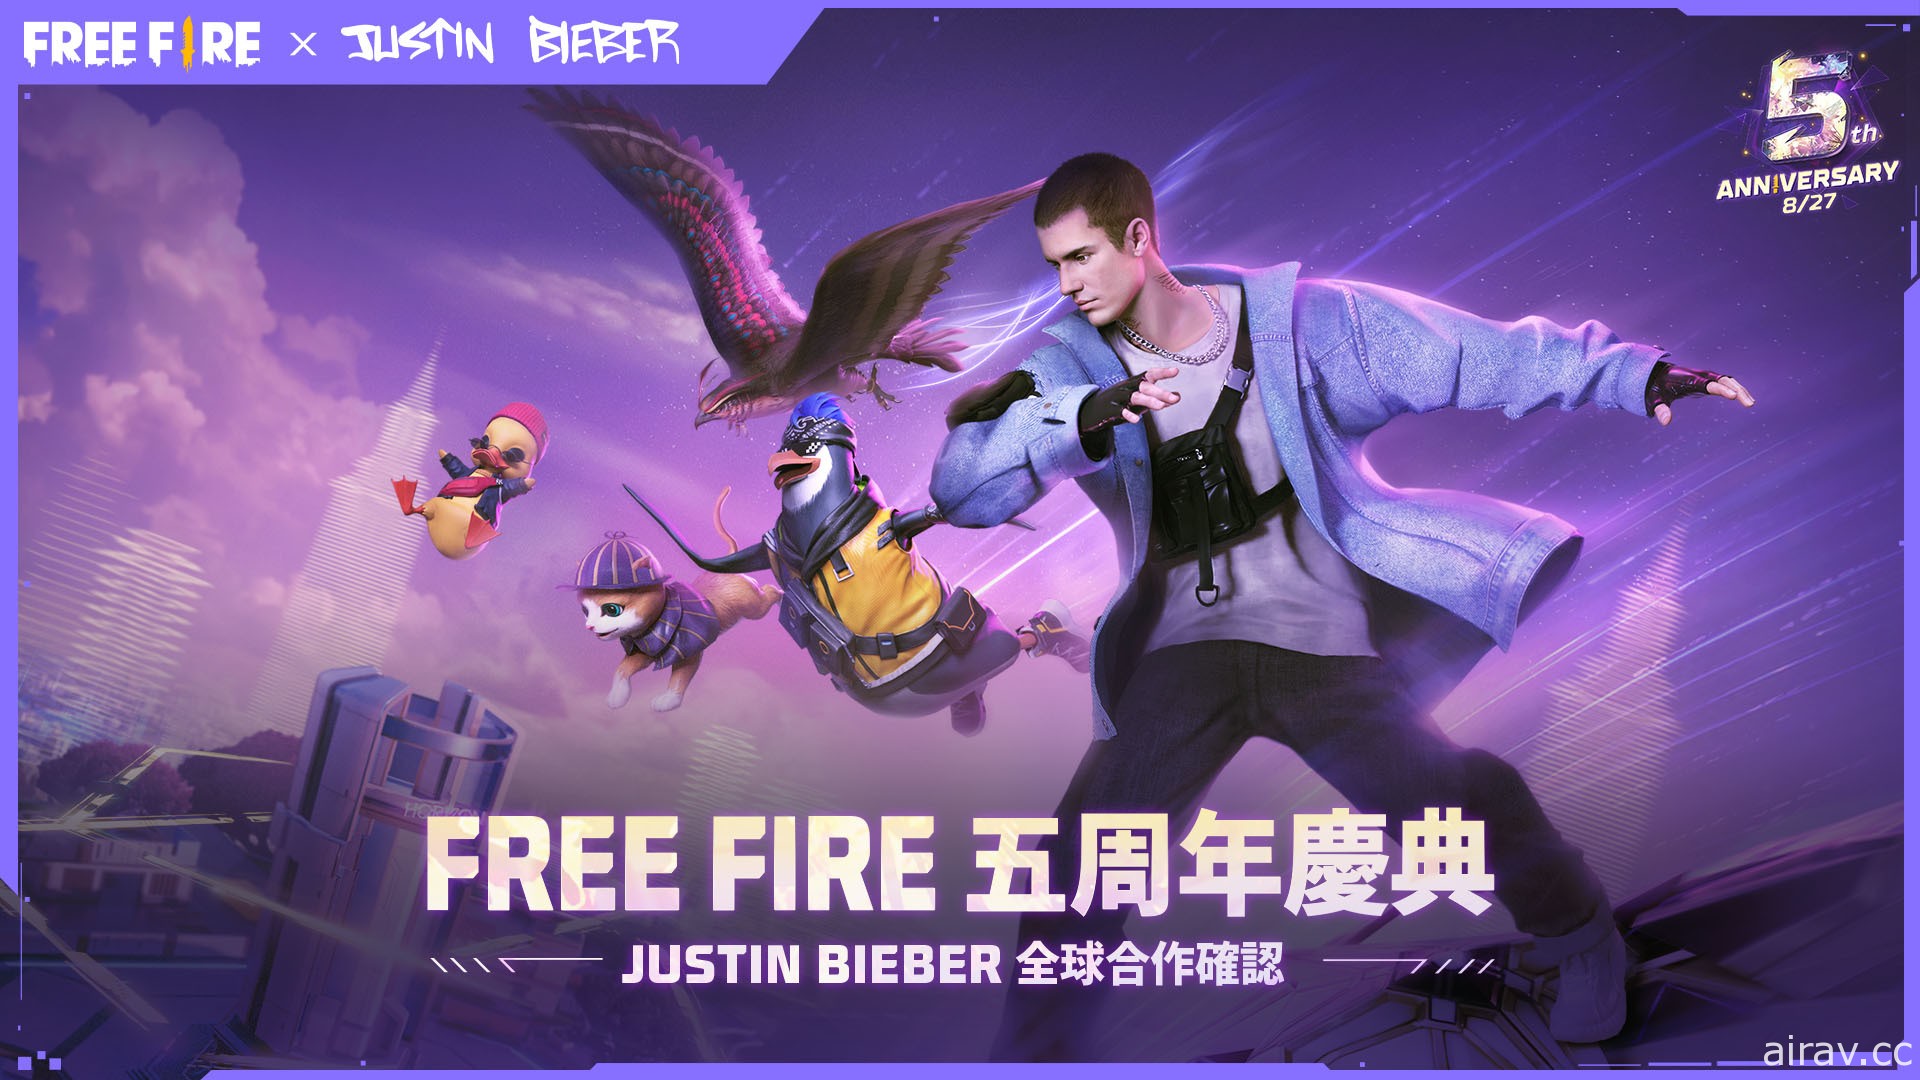 《Free Fire - 我要活下去》宣布與全球巨星 Justin Bieber 攜手慶祝五周年慶典